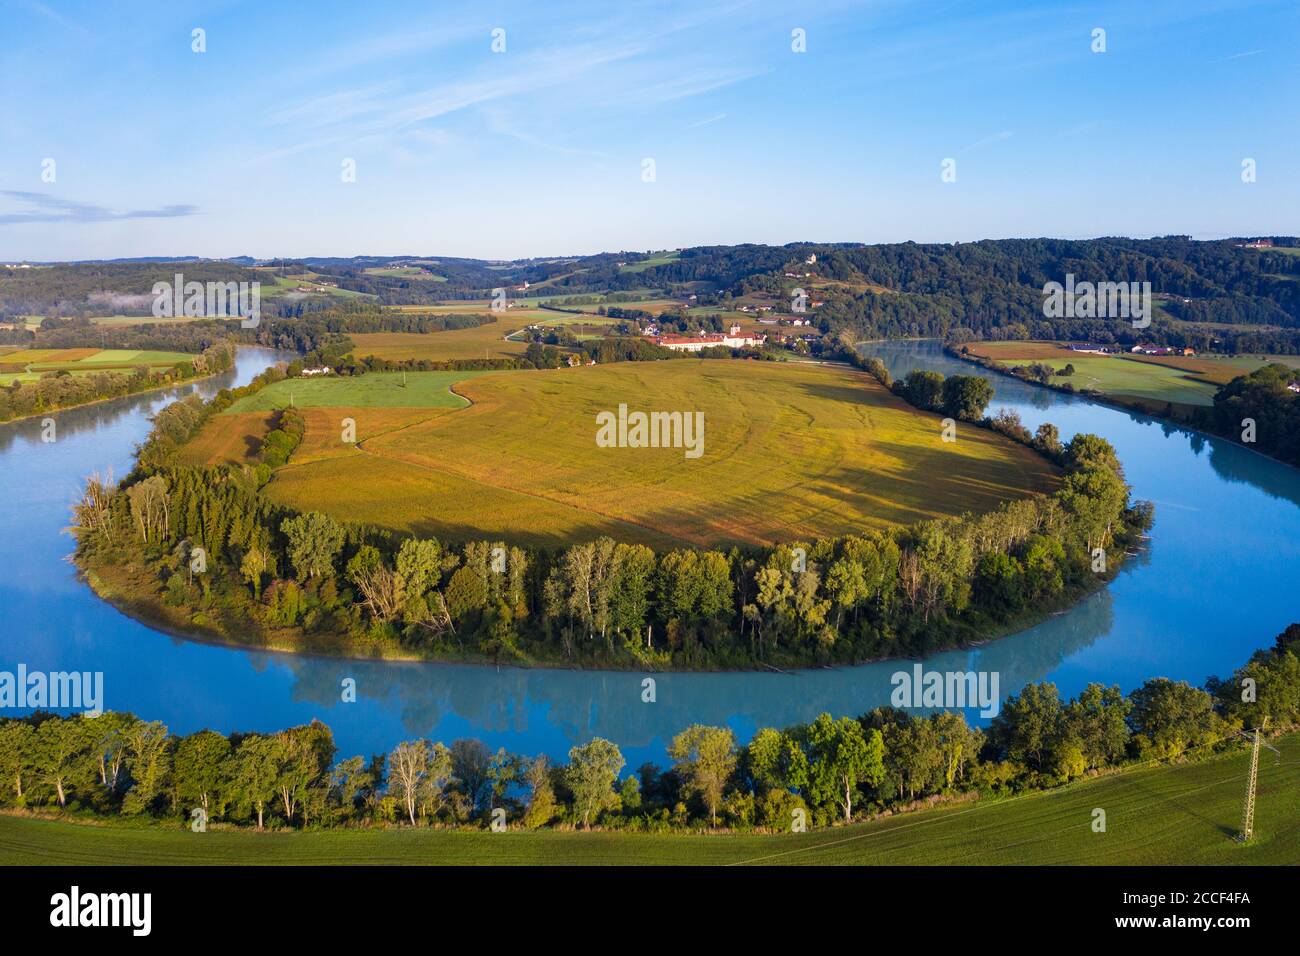 Loop fiume dalla locanda con Au am Inn monastero, a Gars am Inn, vista aerea, alta Baviera, Baviera, Germania Foto Stock